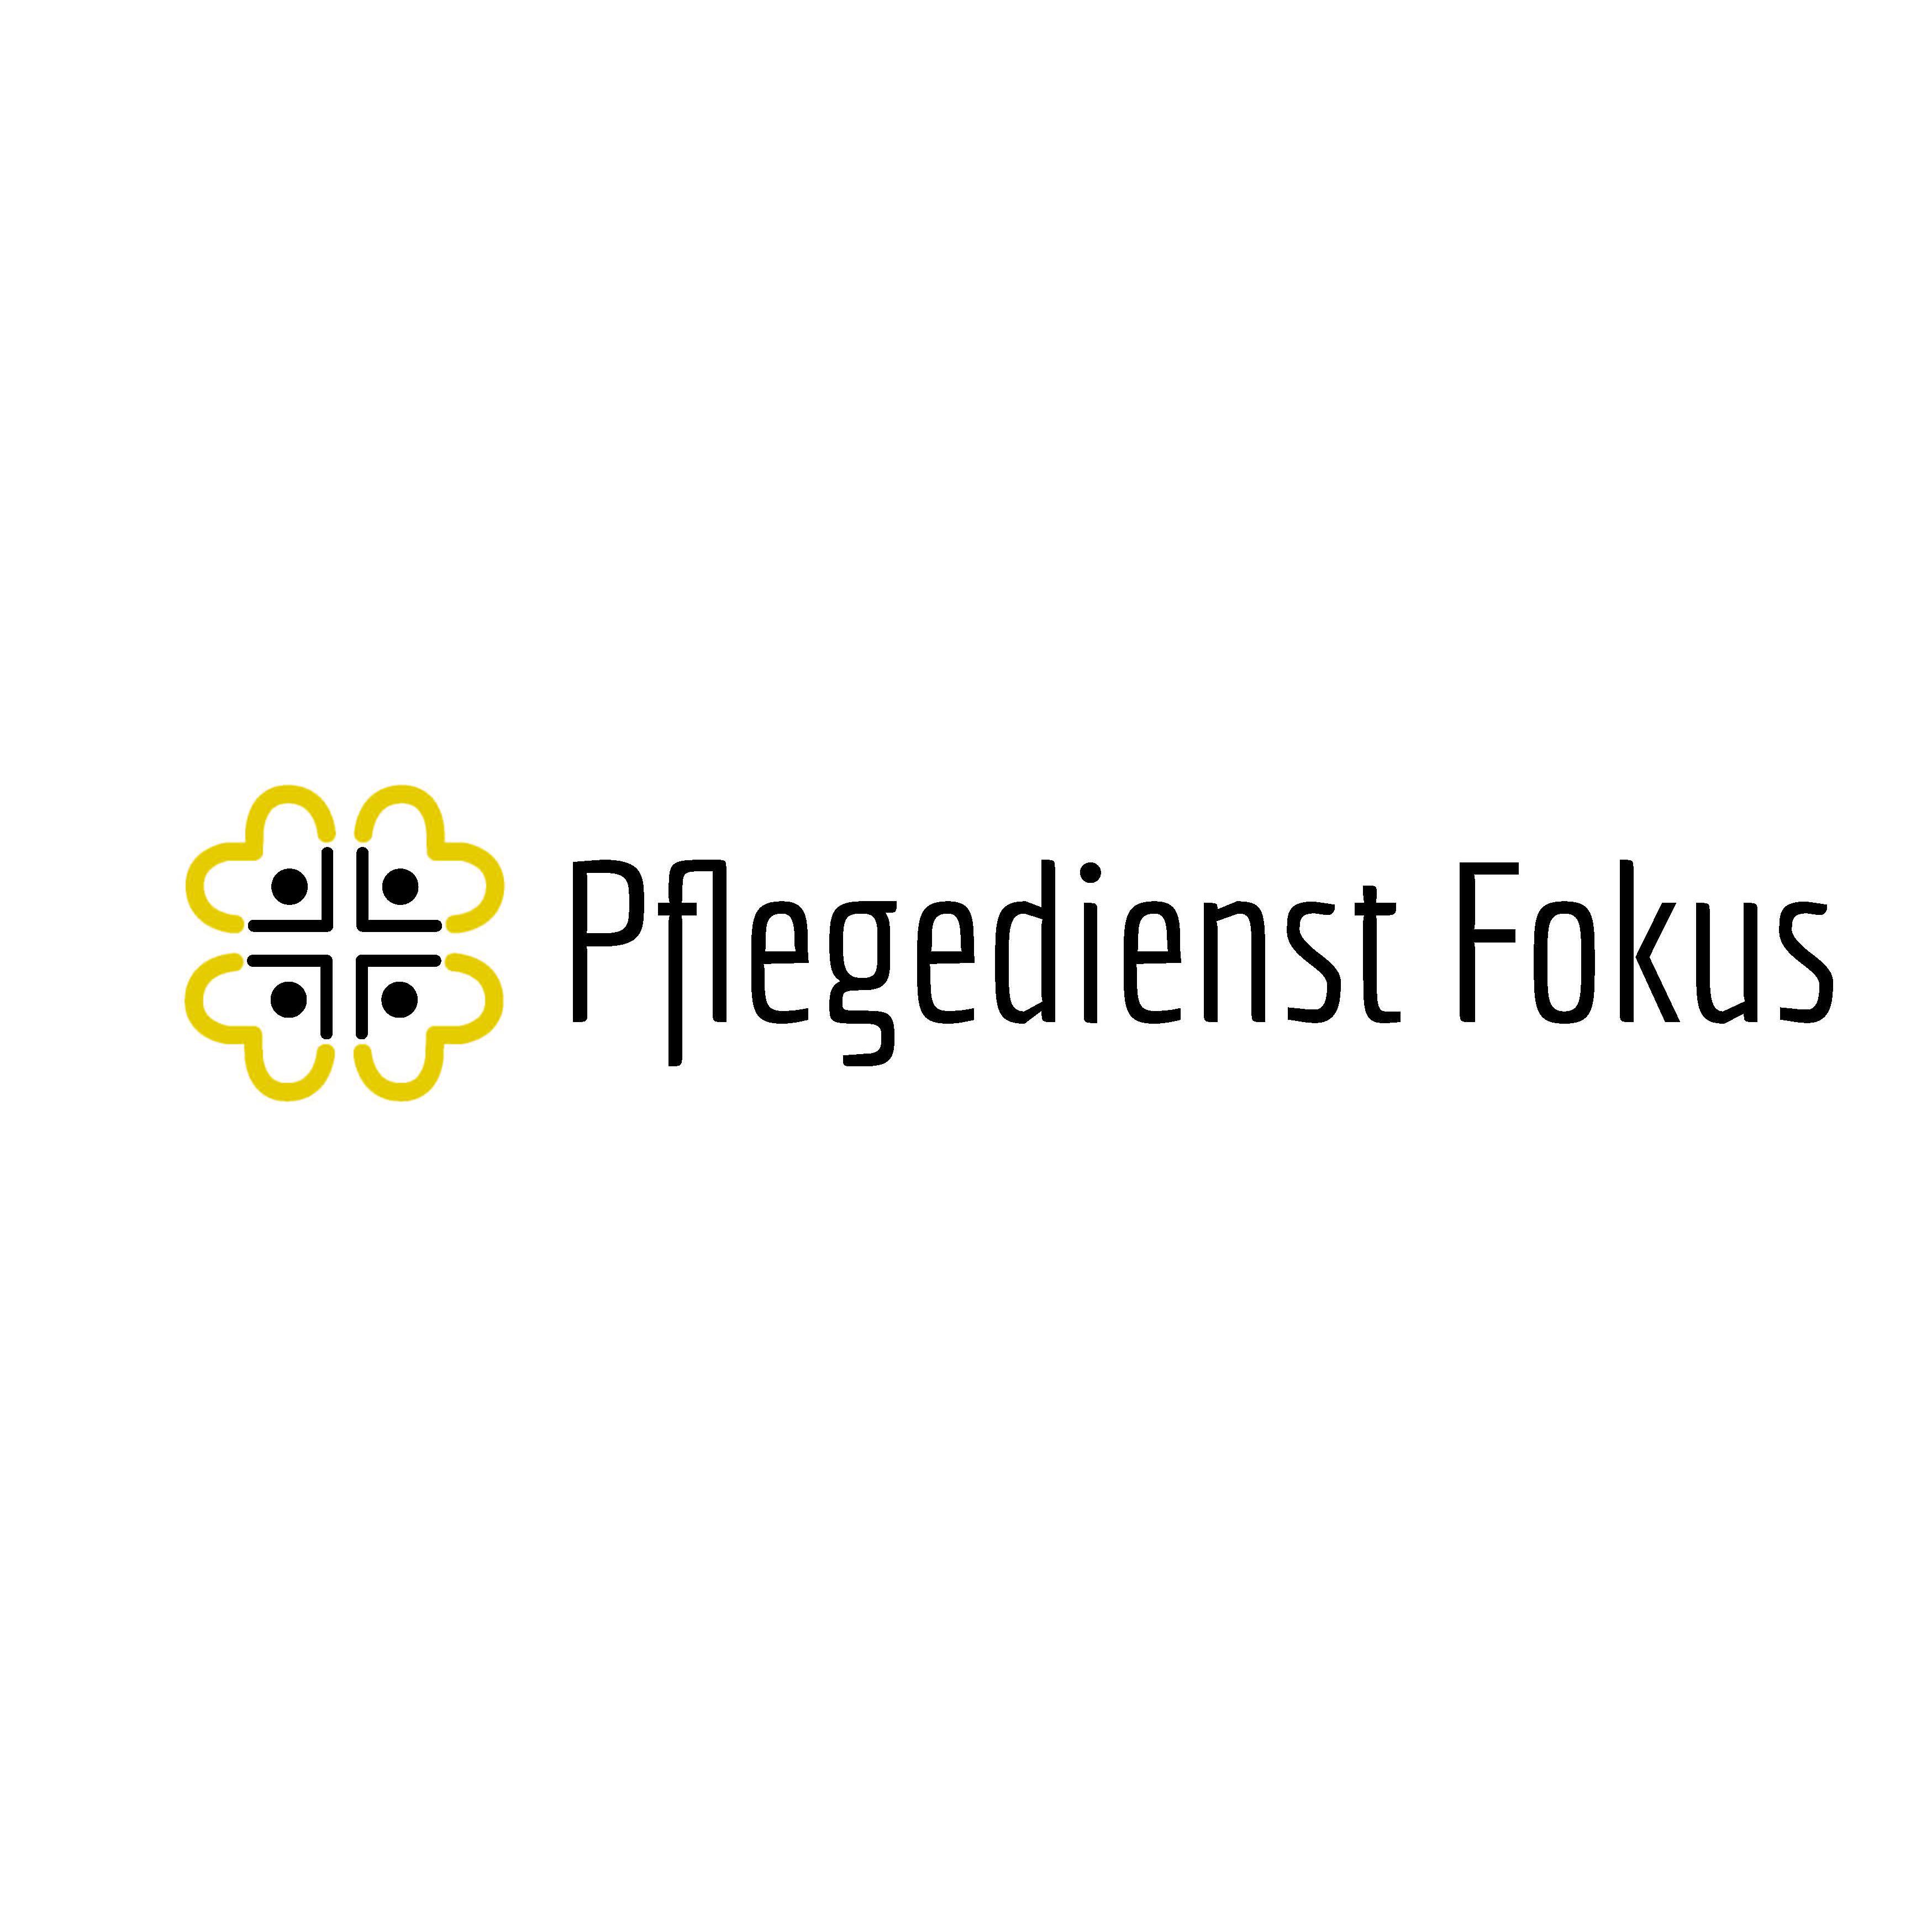 Pflegedienst Fokus Logo